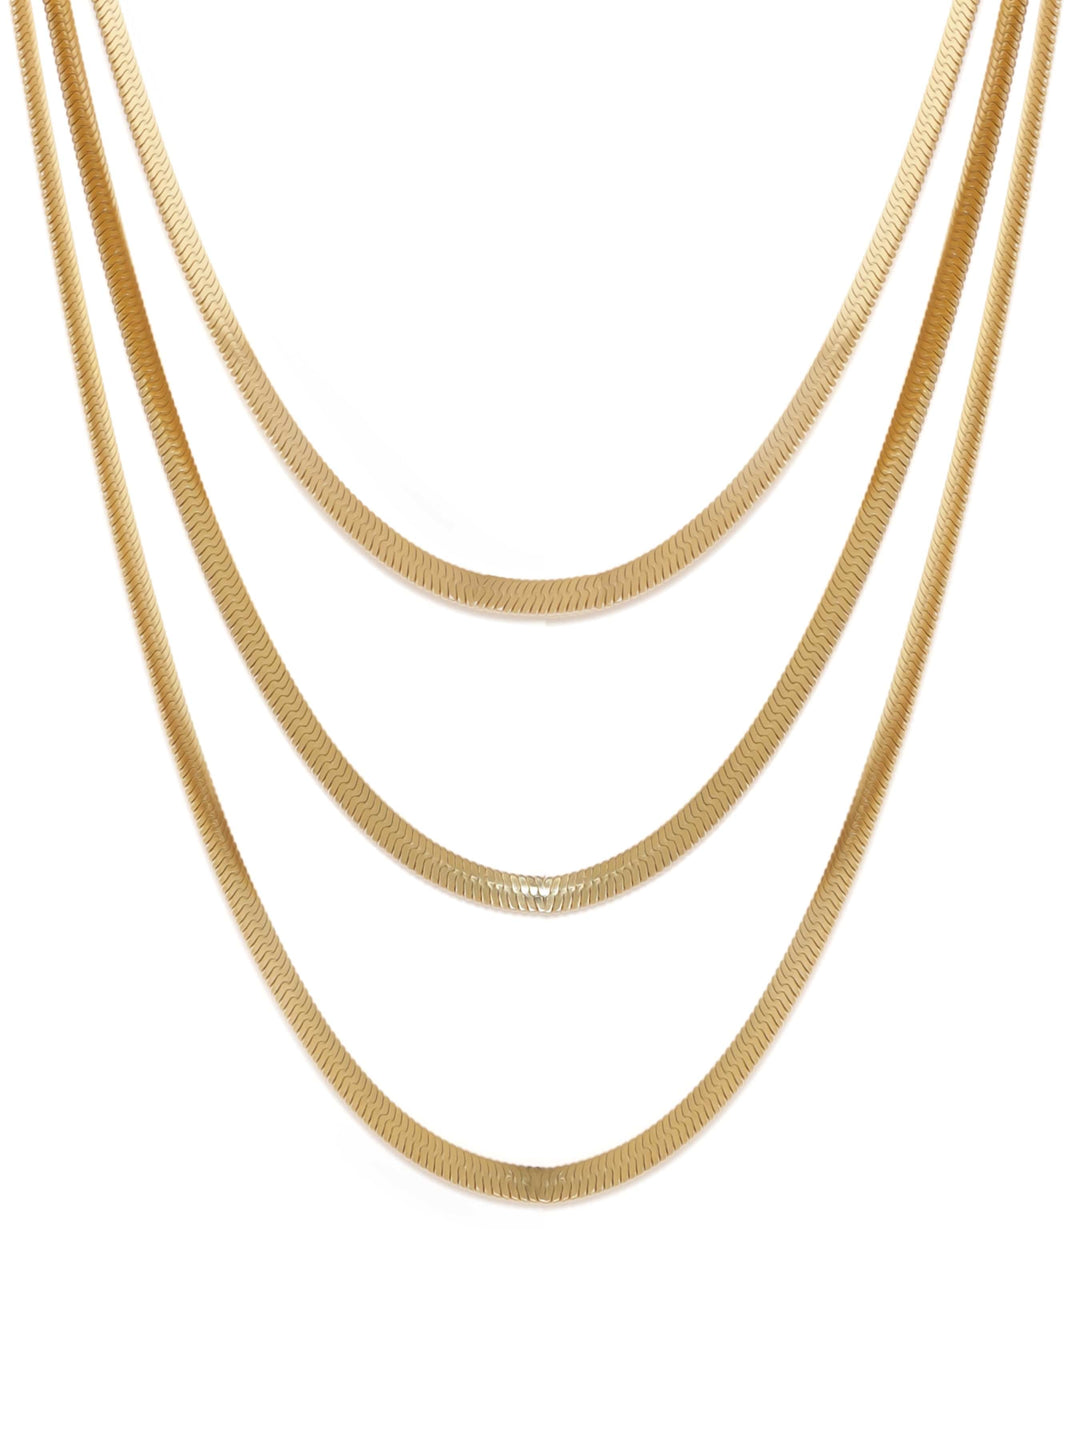 Rubans Voguish Glamorous Cascade Stainless Gold Tone Multi-Layer Necklace Necklace